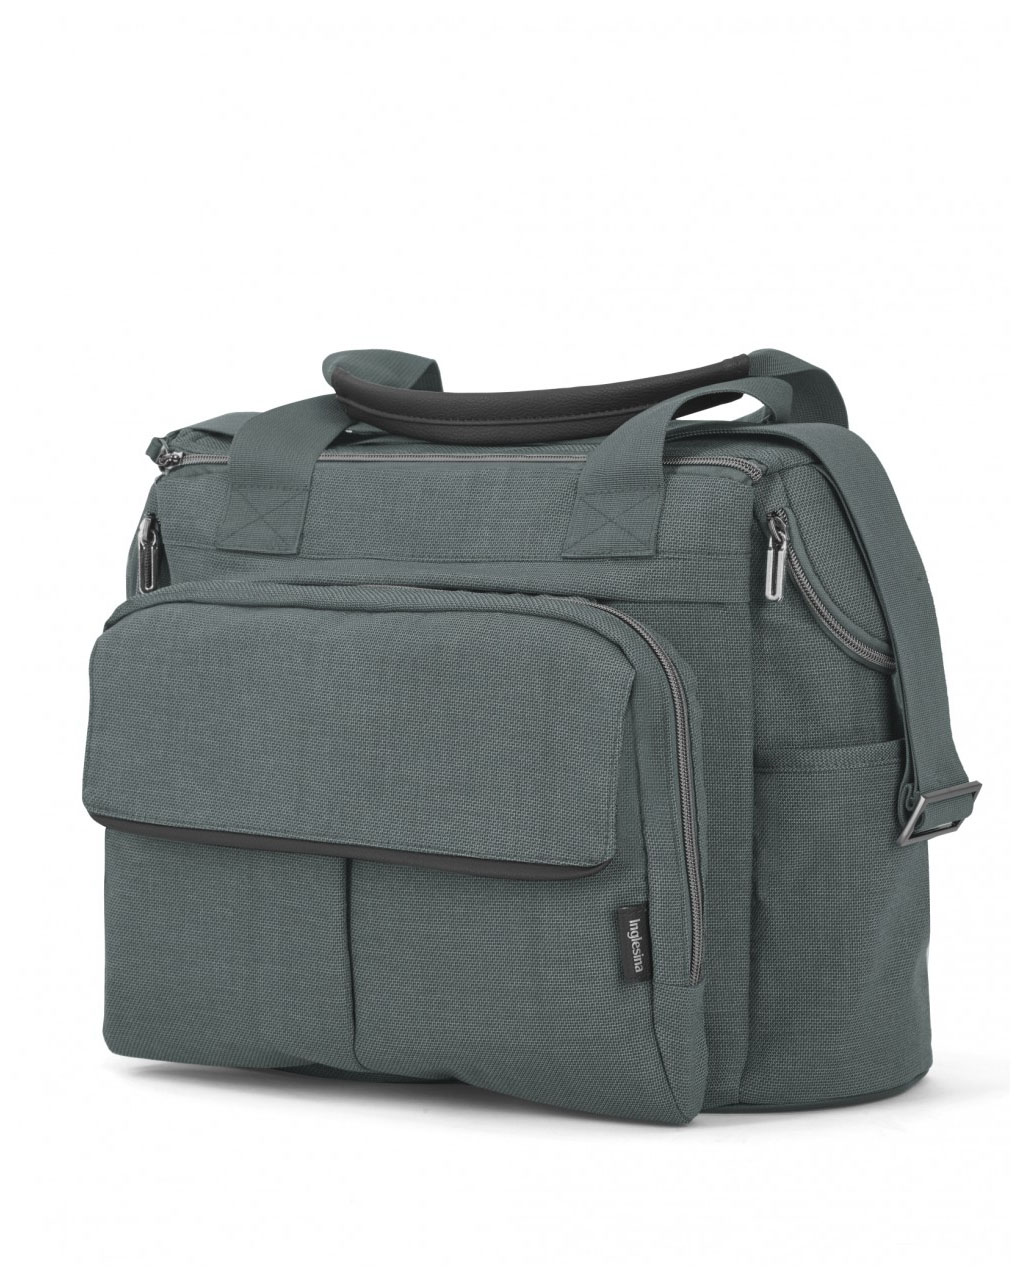 Inglesina τσάντα-αλλαξιέρα ώμου/χειρός aptica dual bag emerald green